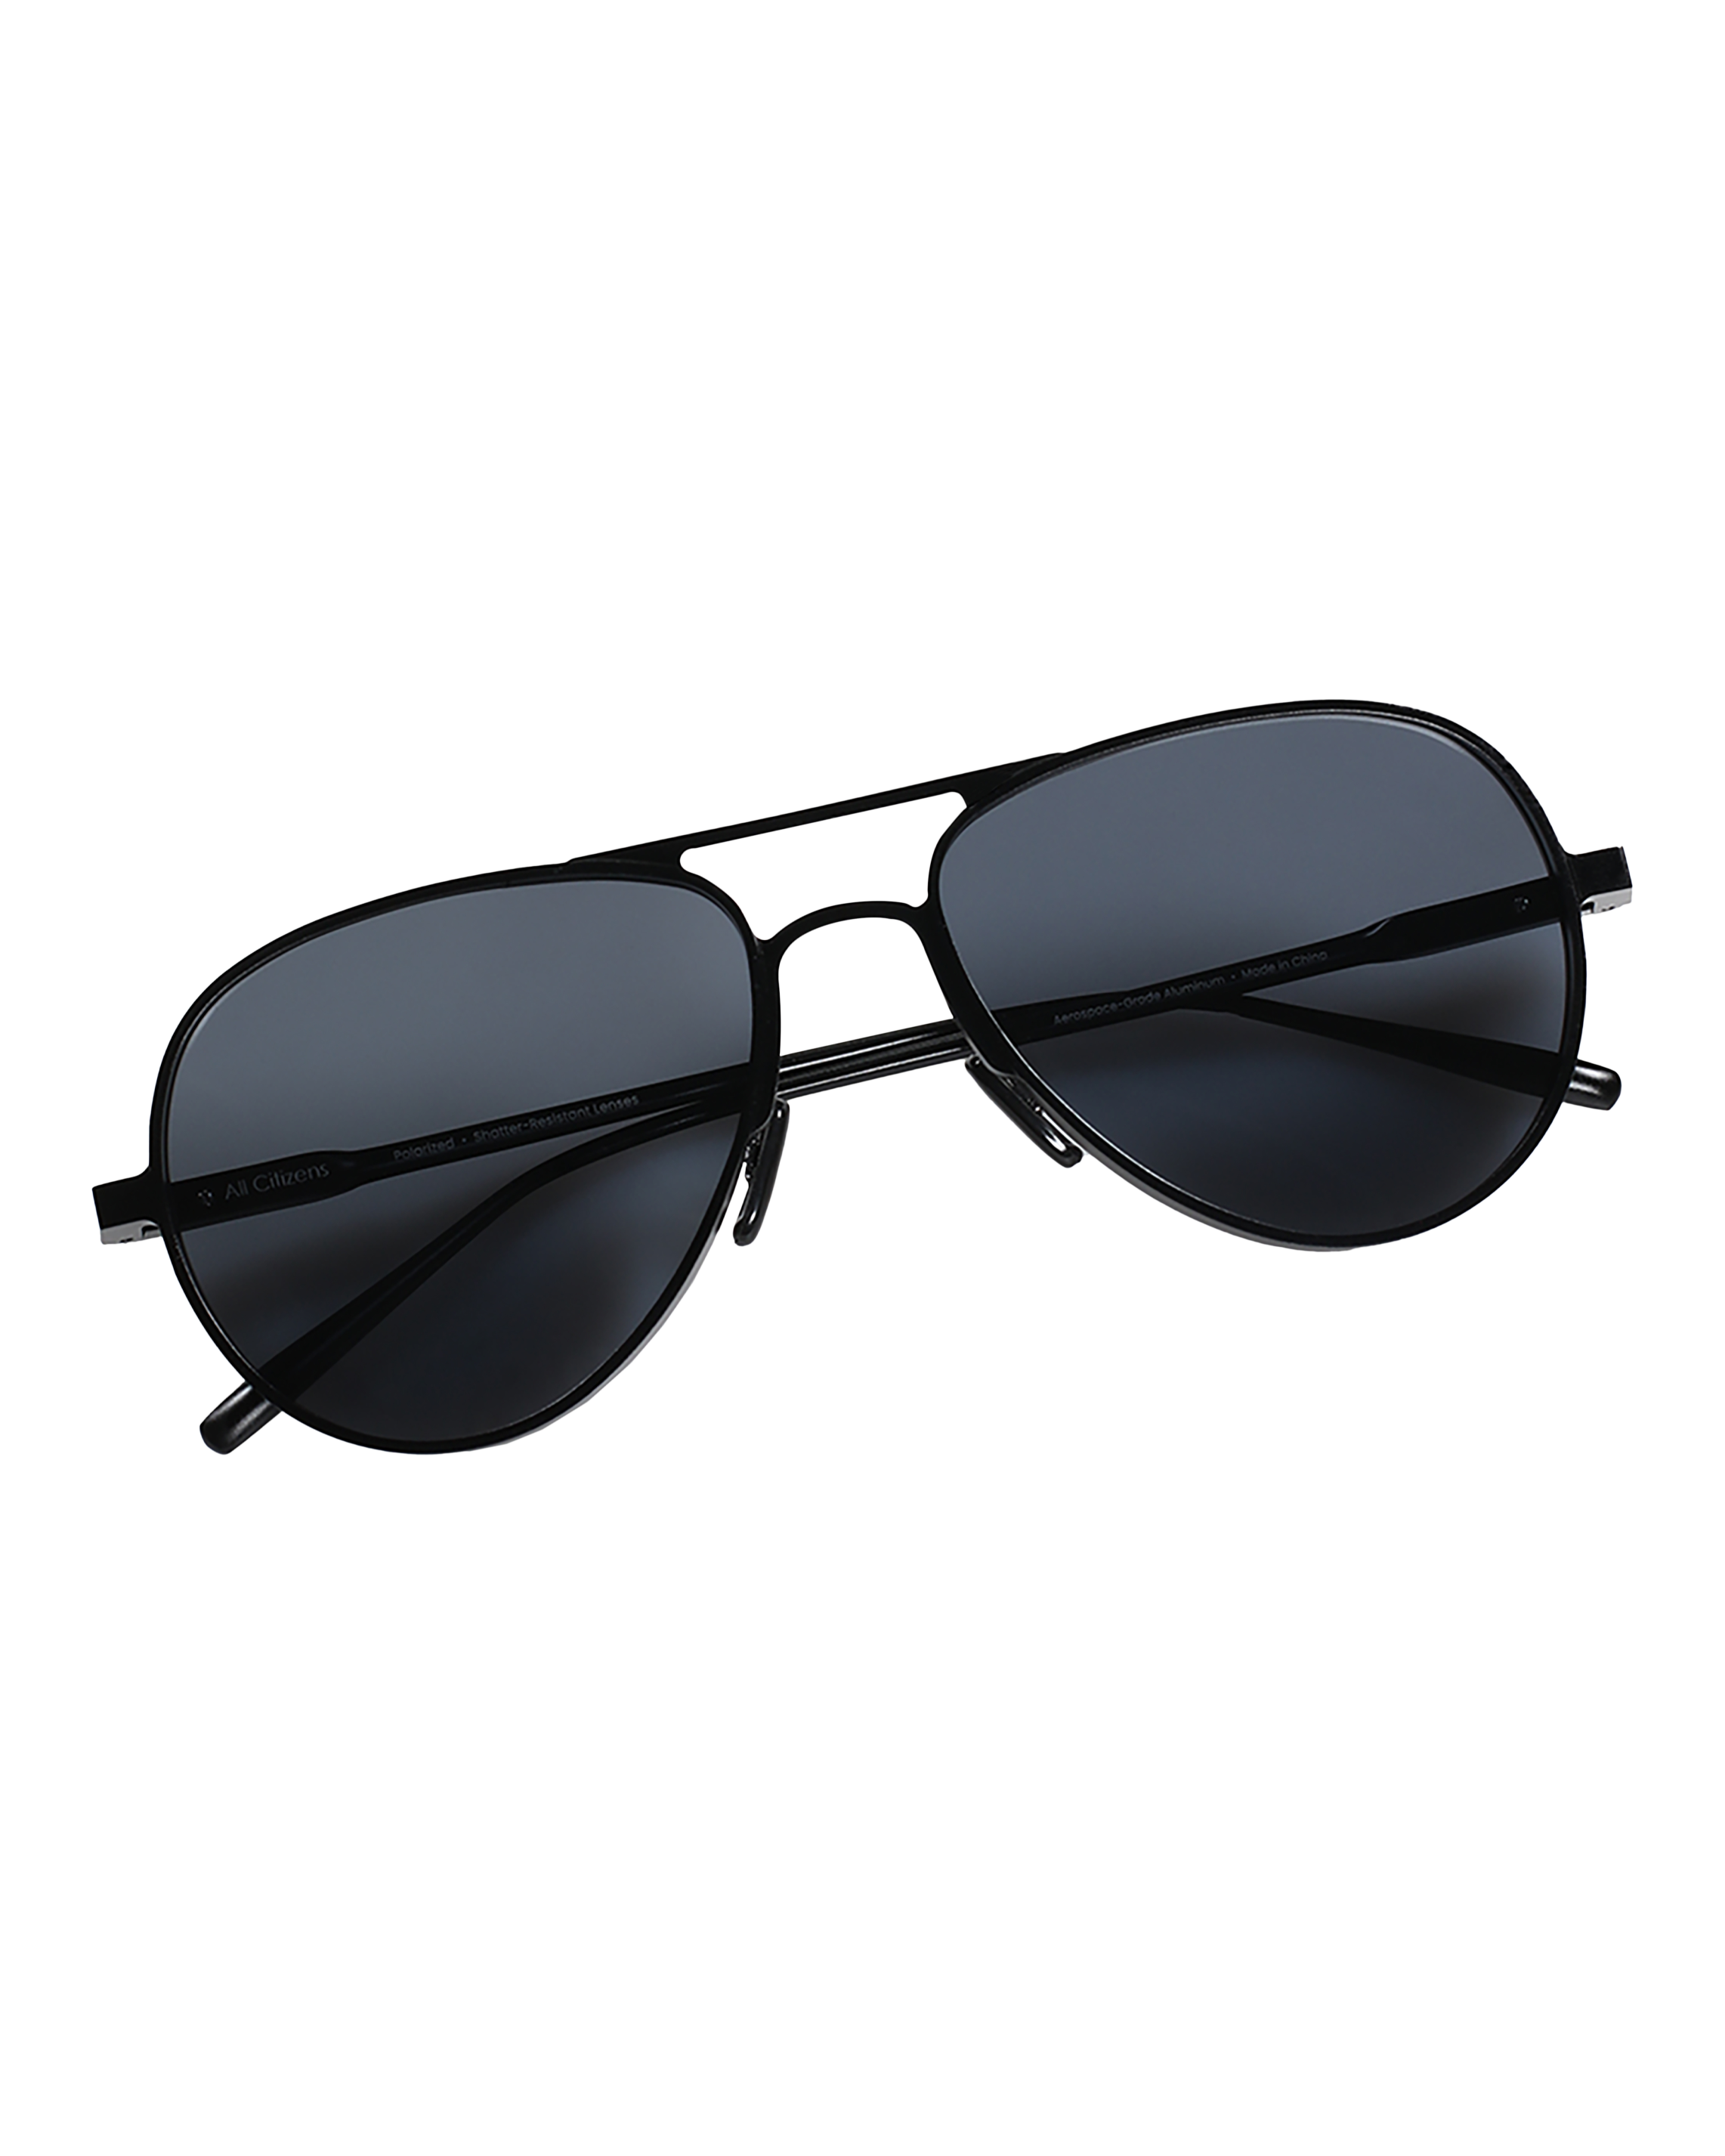 Xezo UV 400 Titanium Polarized Aviator Glasses with Steel Cable Wire, Dark Grey